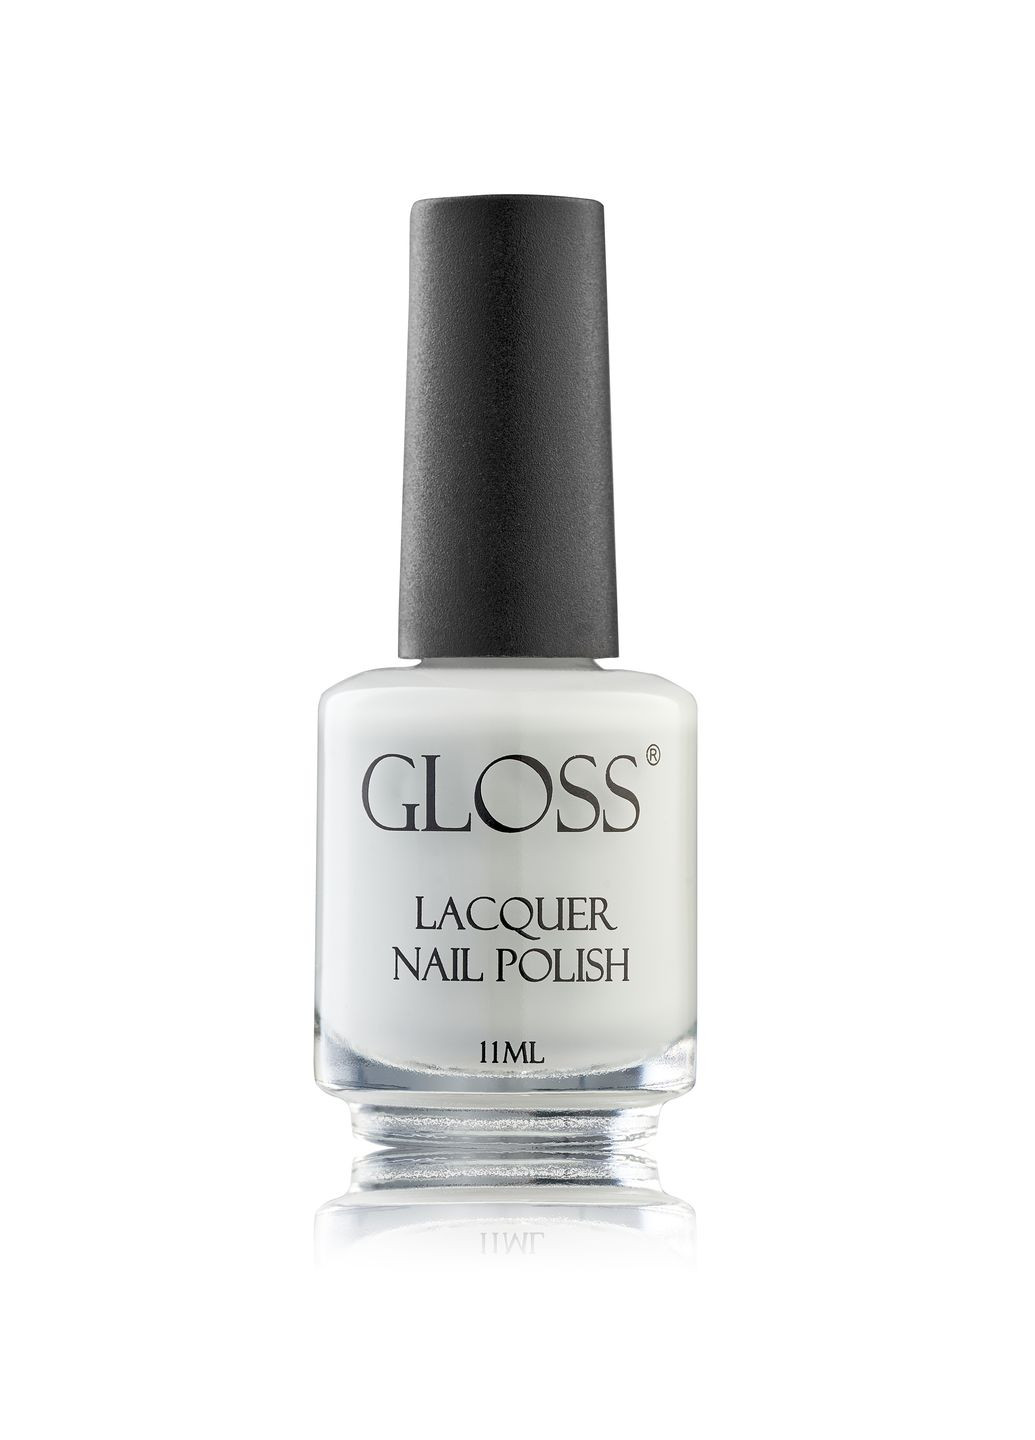 Лак для ногтей GLOSS 019, 11 мл Gloss Company lacquer nail polish (276255603)